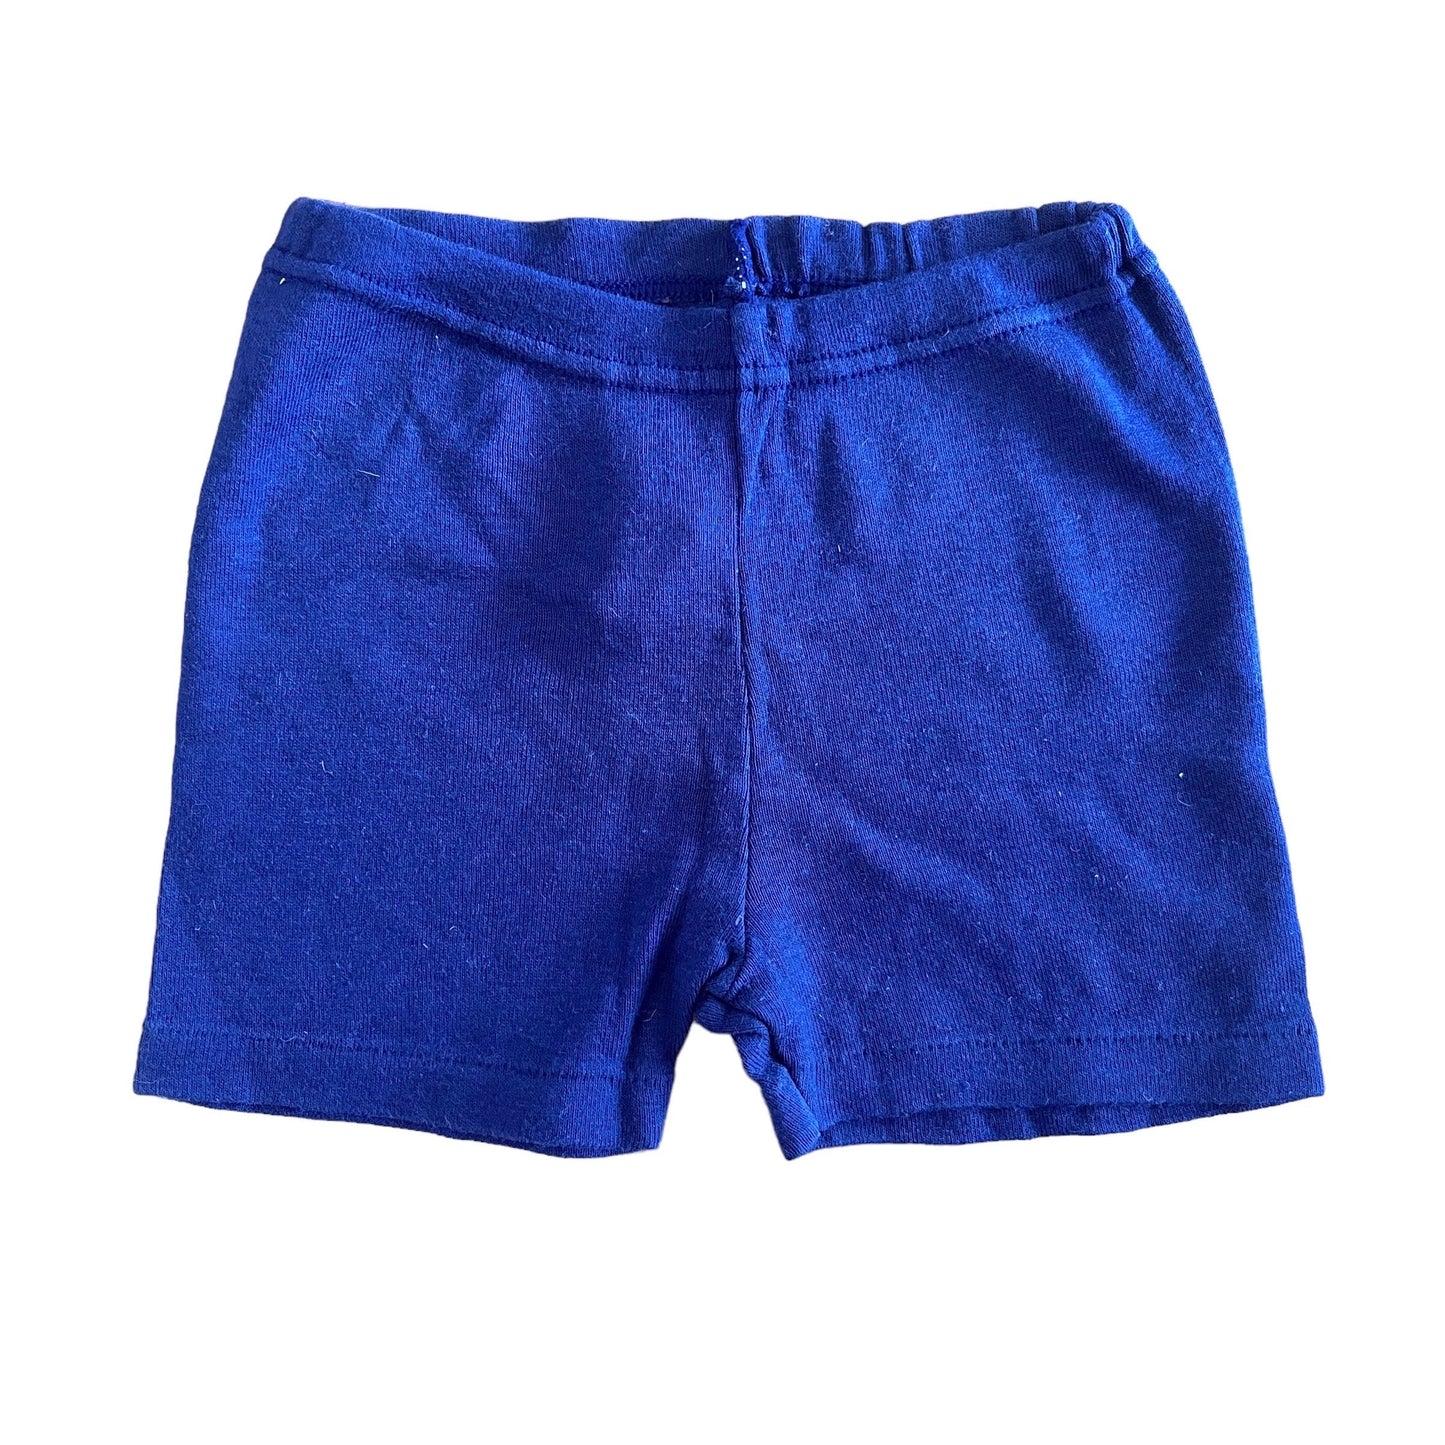 Vintage 70's Navy / Cotton Shorts / Pants / Underwear 12-24M